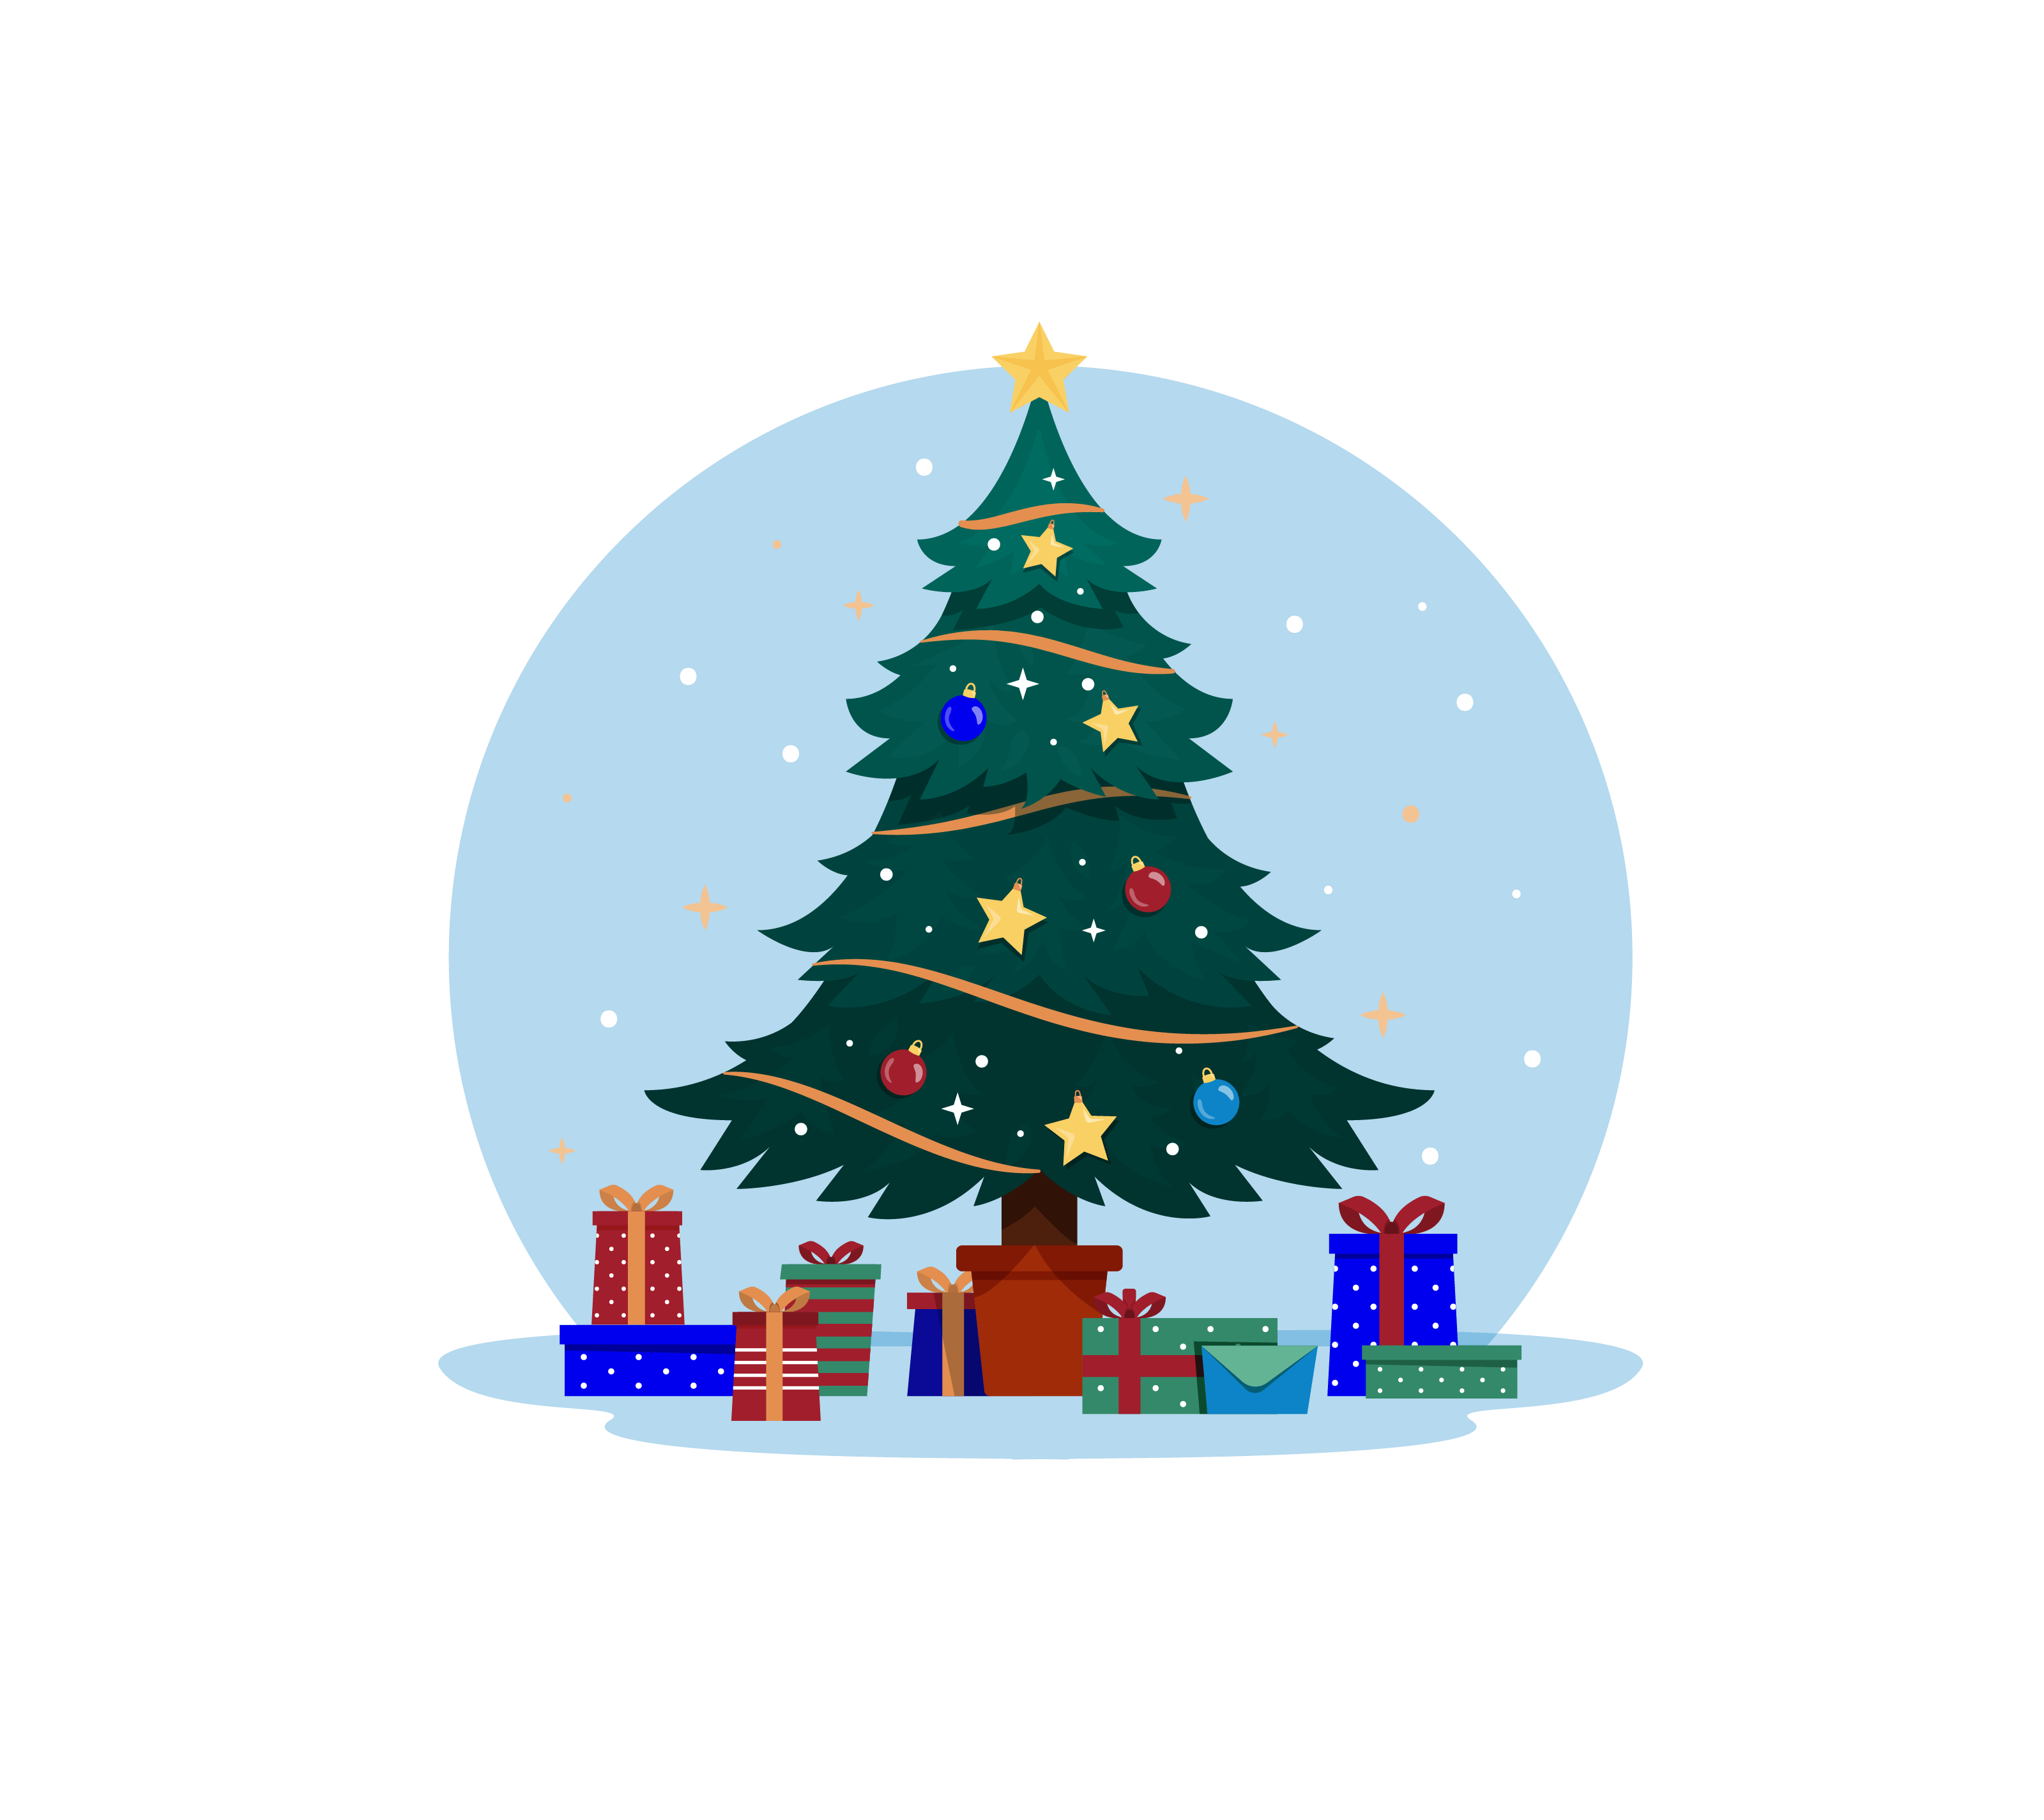 Illustration of a Christmas tree